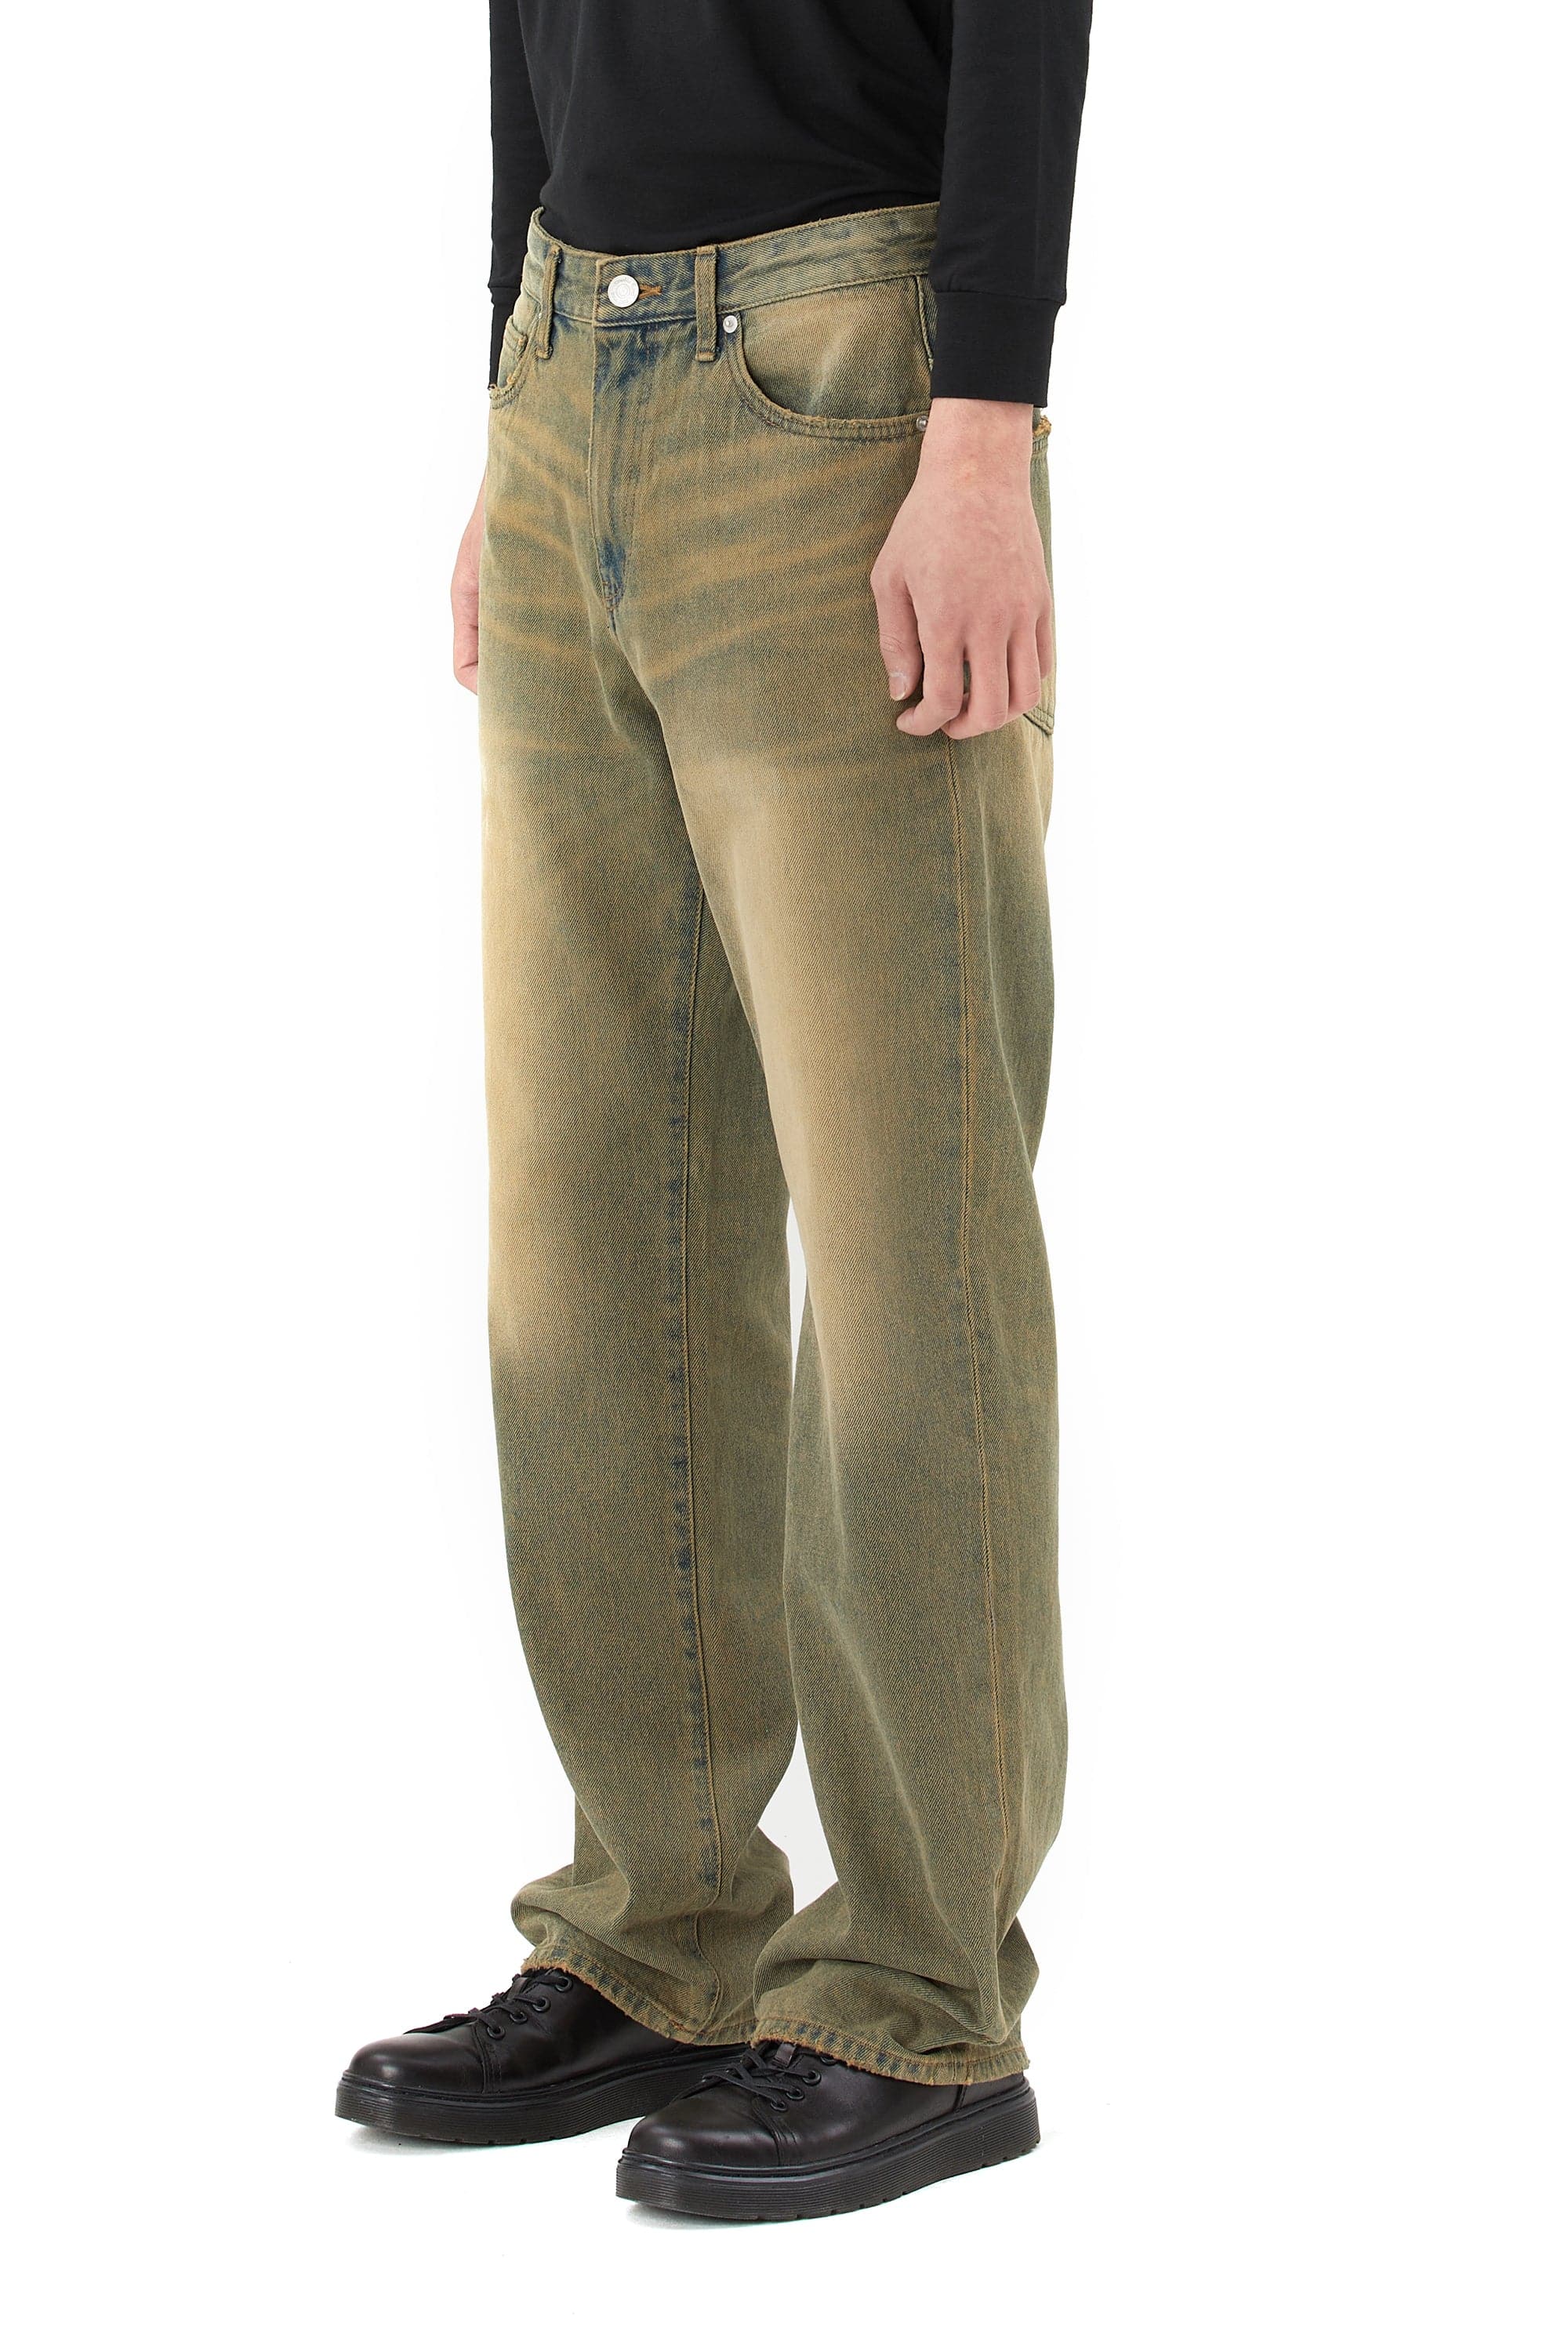 U.S. POLO ASSN. Slim Men Brown Jeans - Buy U.S. POLO ASSN. Slim Men Brown  Jeans Online at Best Prices in India | Flipkart.com